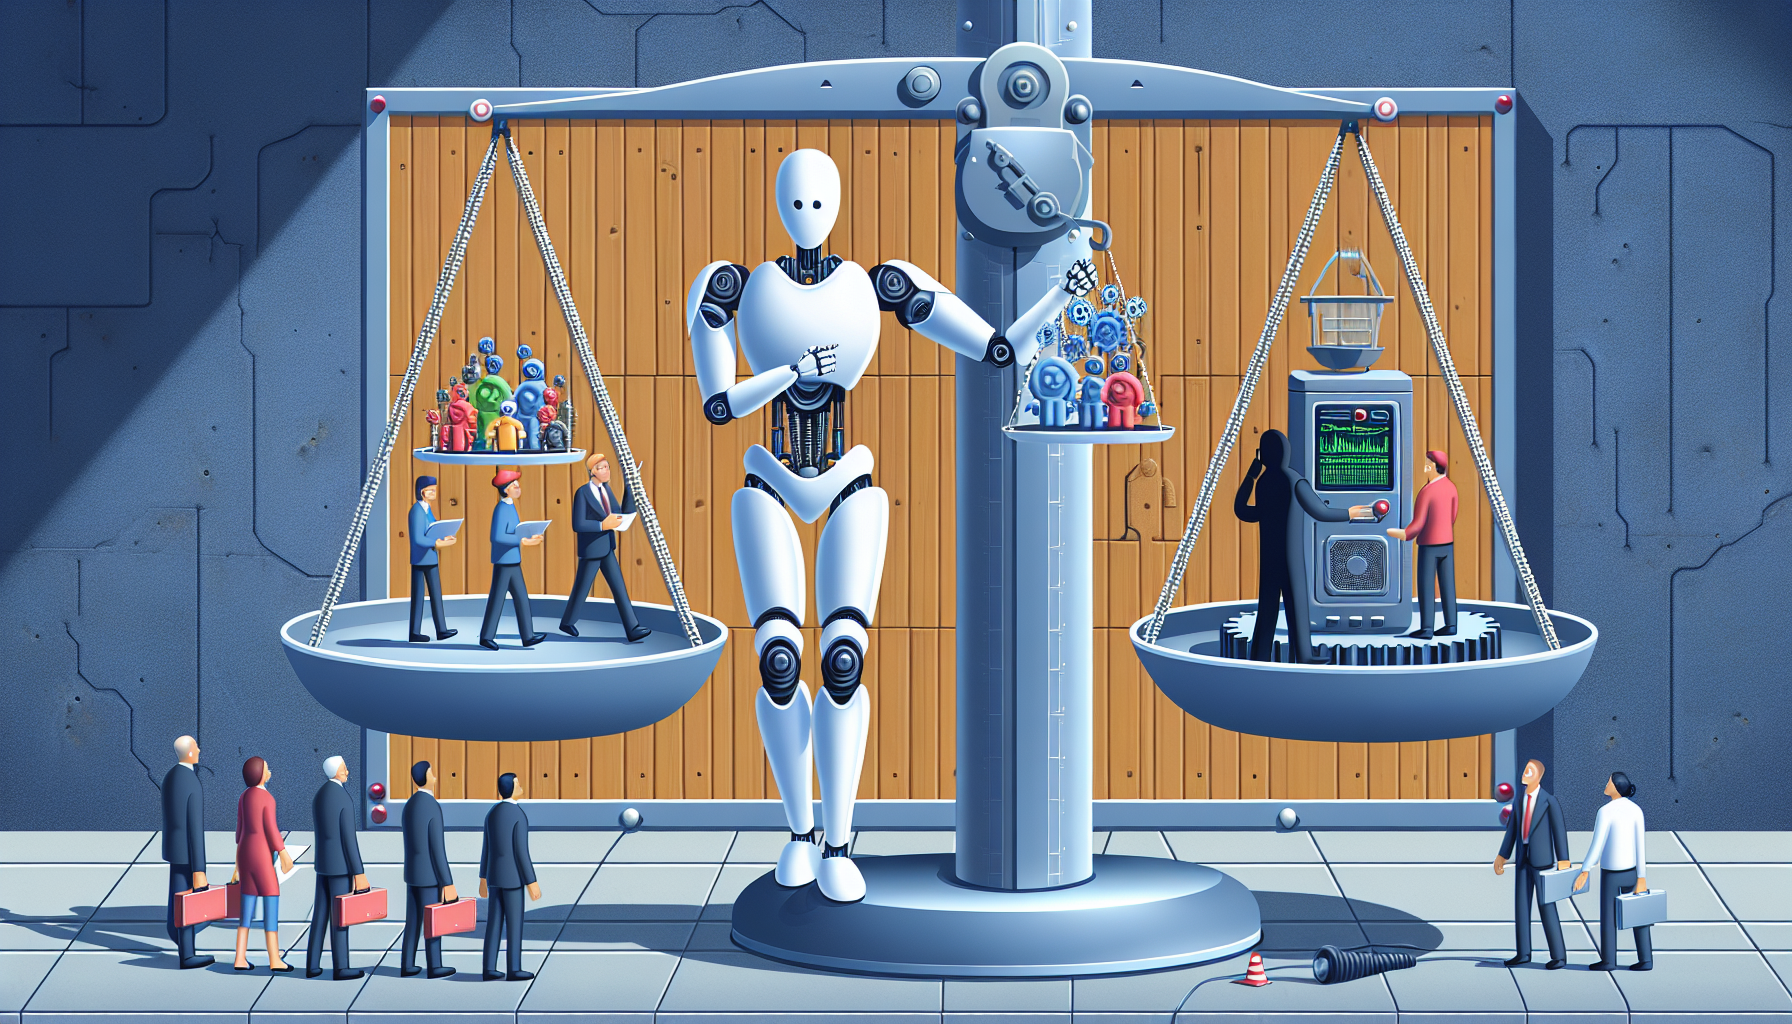 Balancing benefits and concerns of humanoid robots